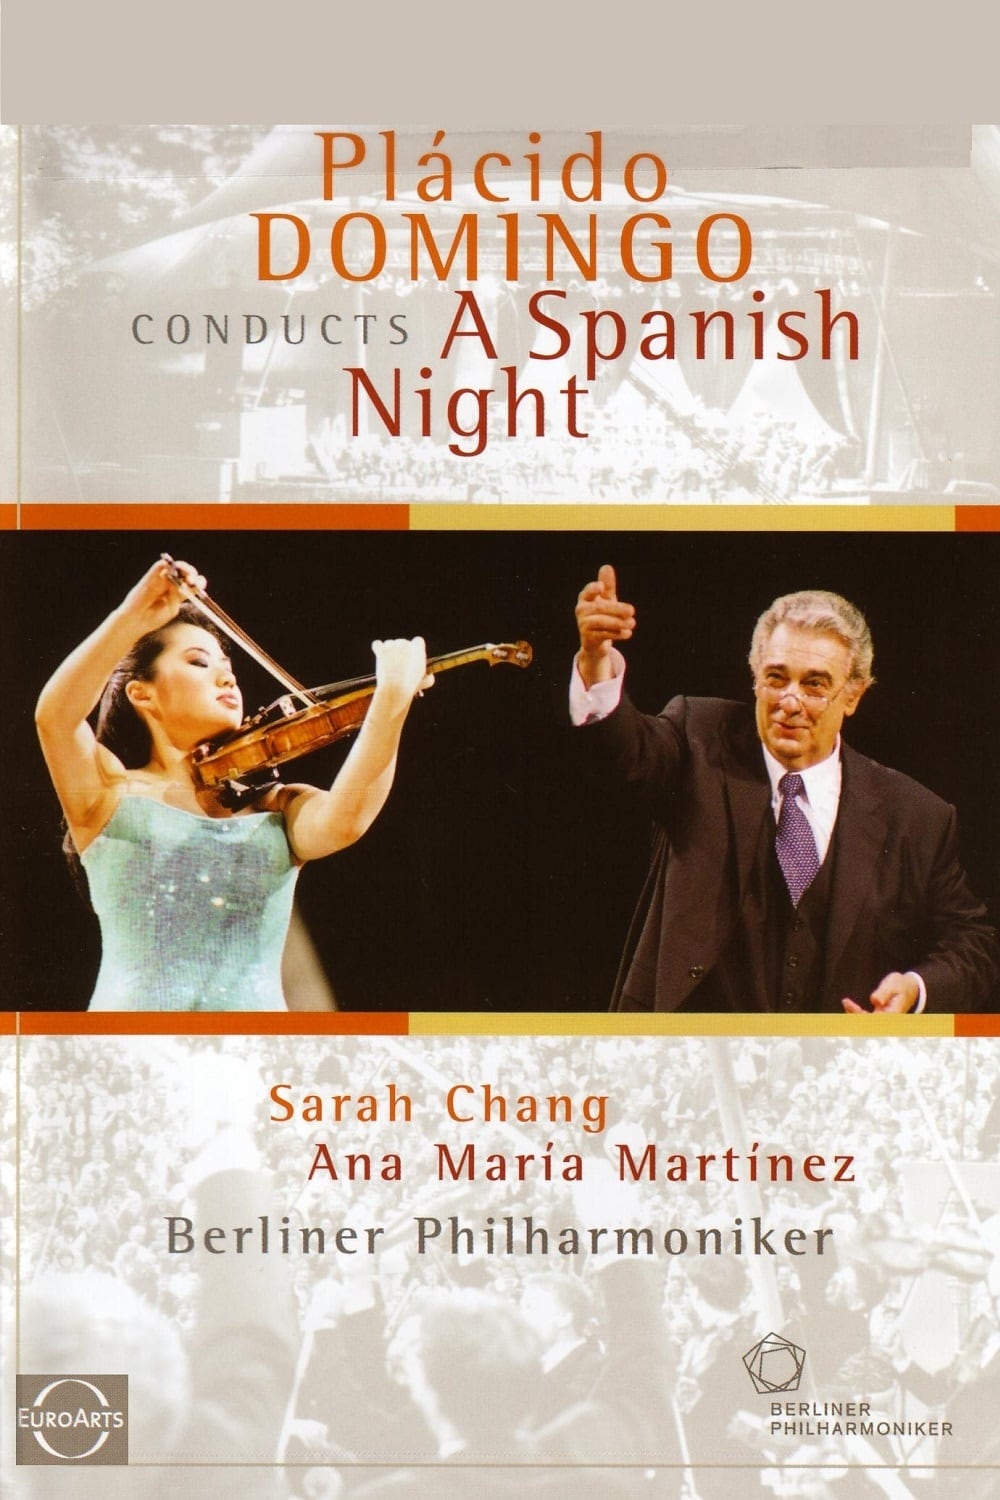 A Spanish Night - Domingo - Berliner Philharmoniker